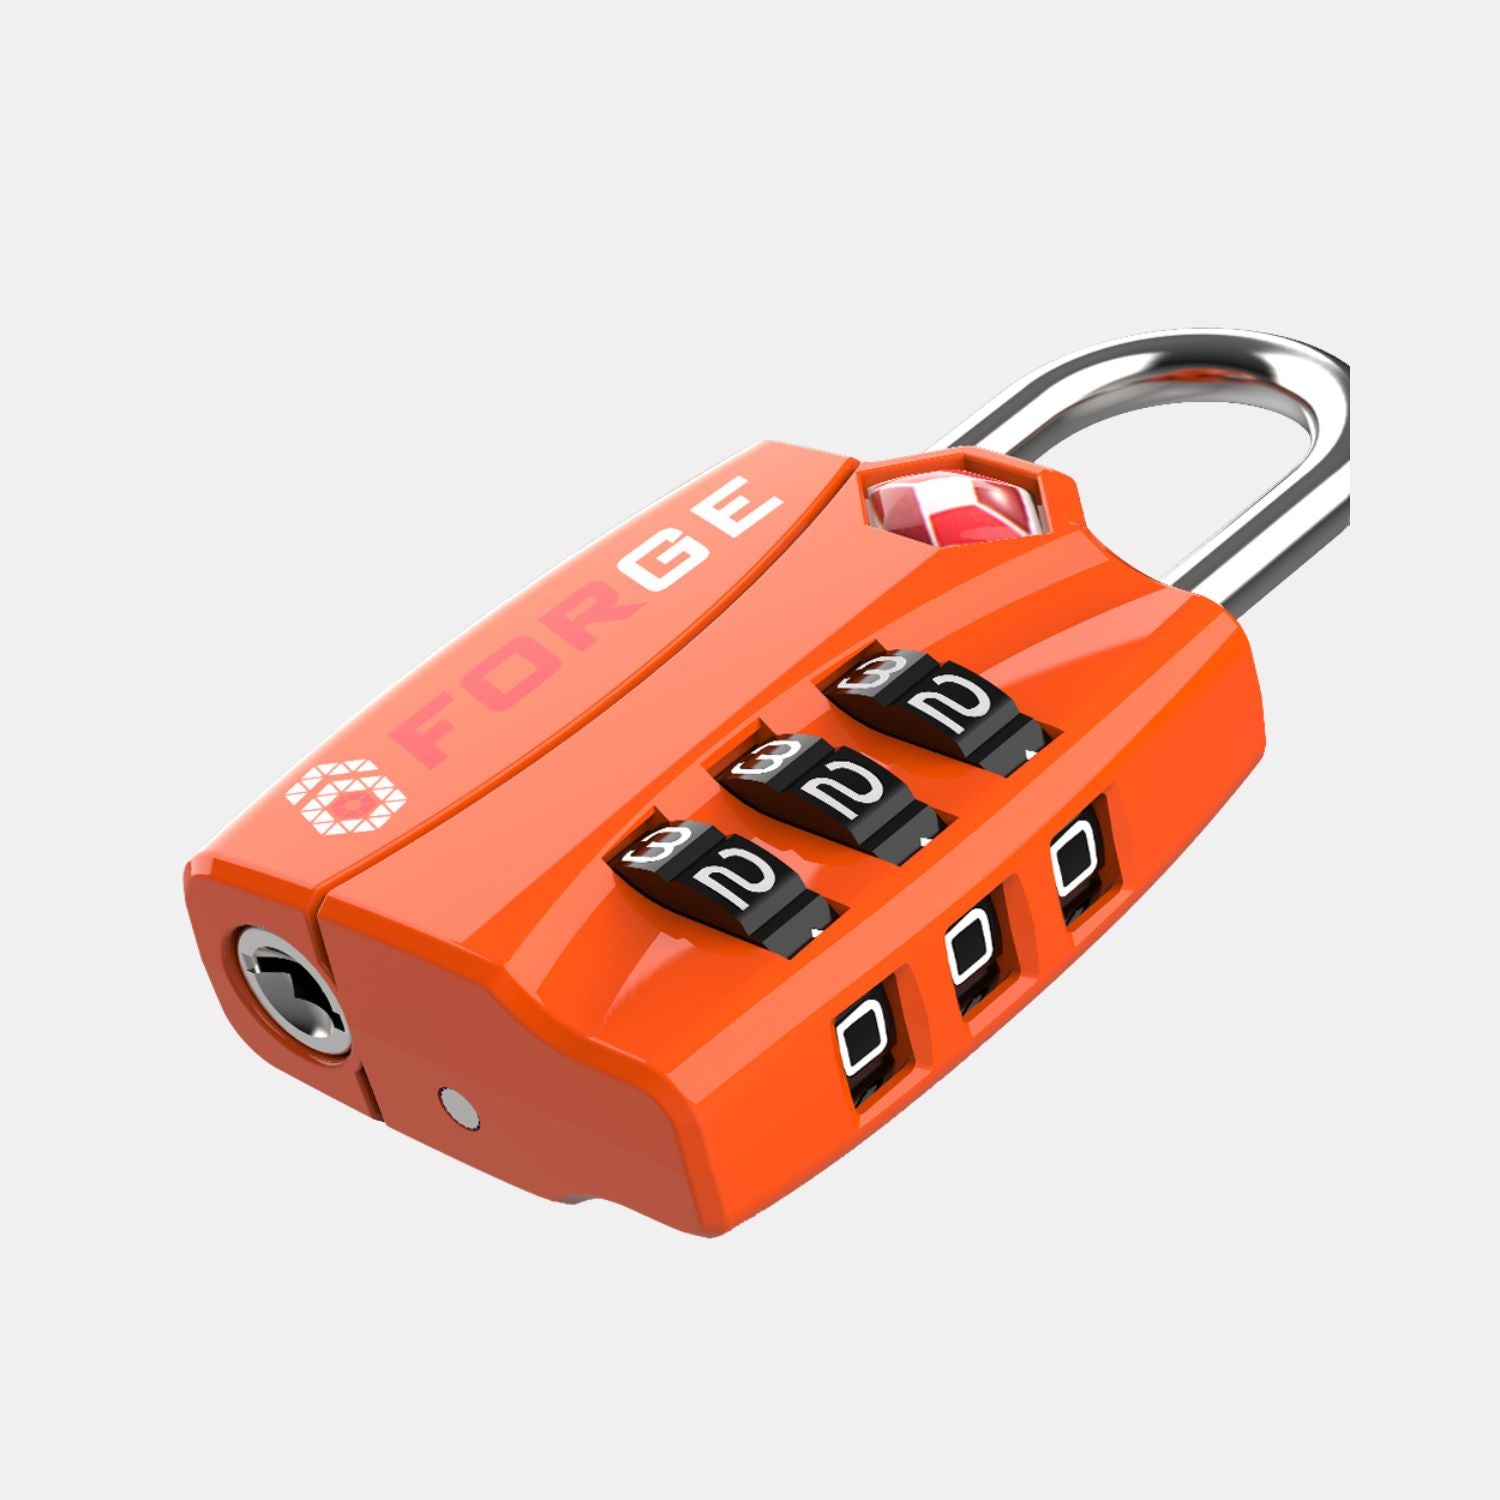 TSA-Approved Luggage Locks: 3-Digit Combination, Open Alert Indicator, Orange 2 Locks